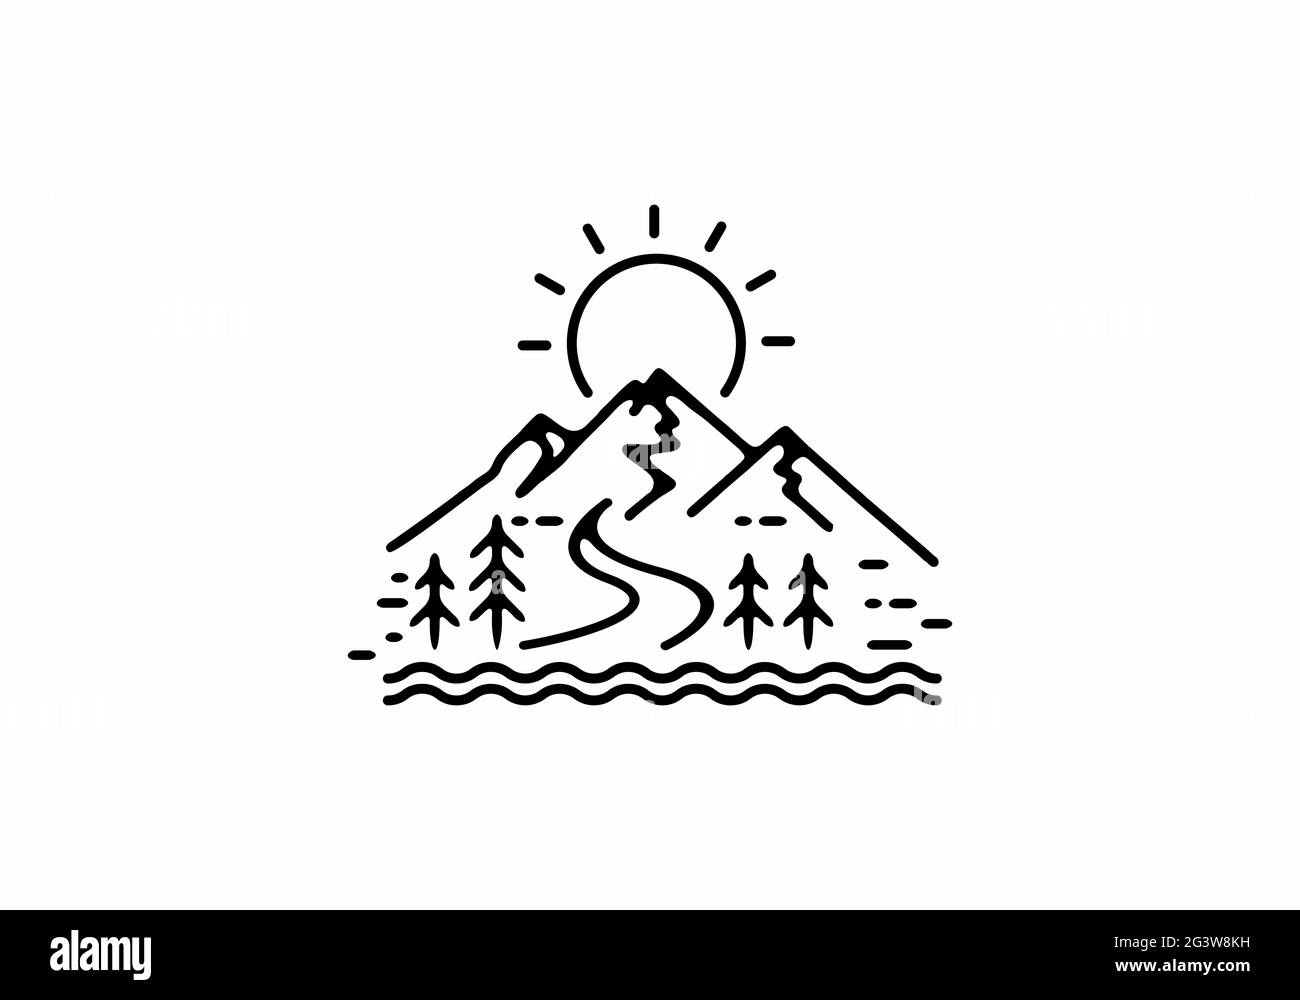 Black line art illustration of mountain landscape design Stock Vector